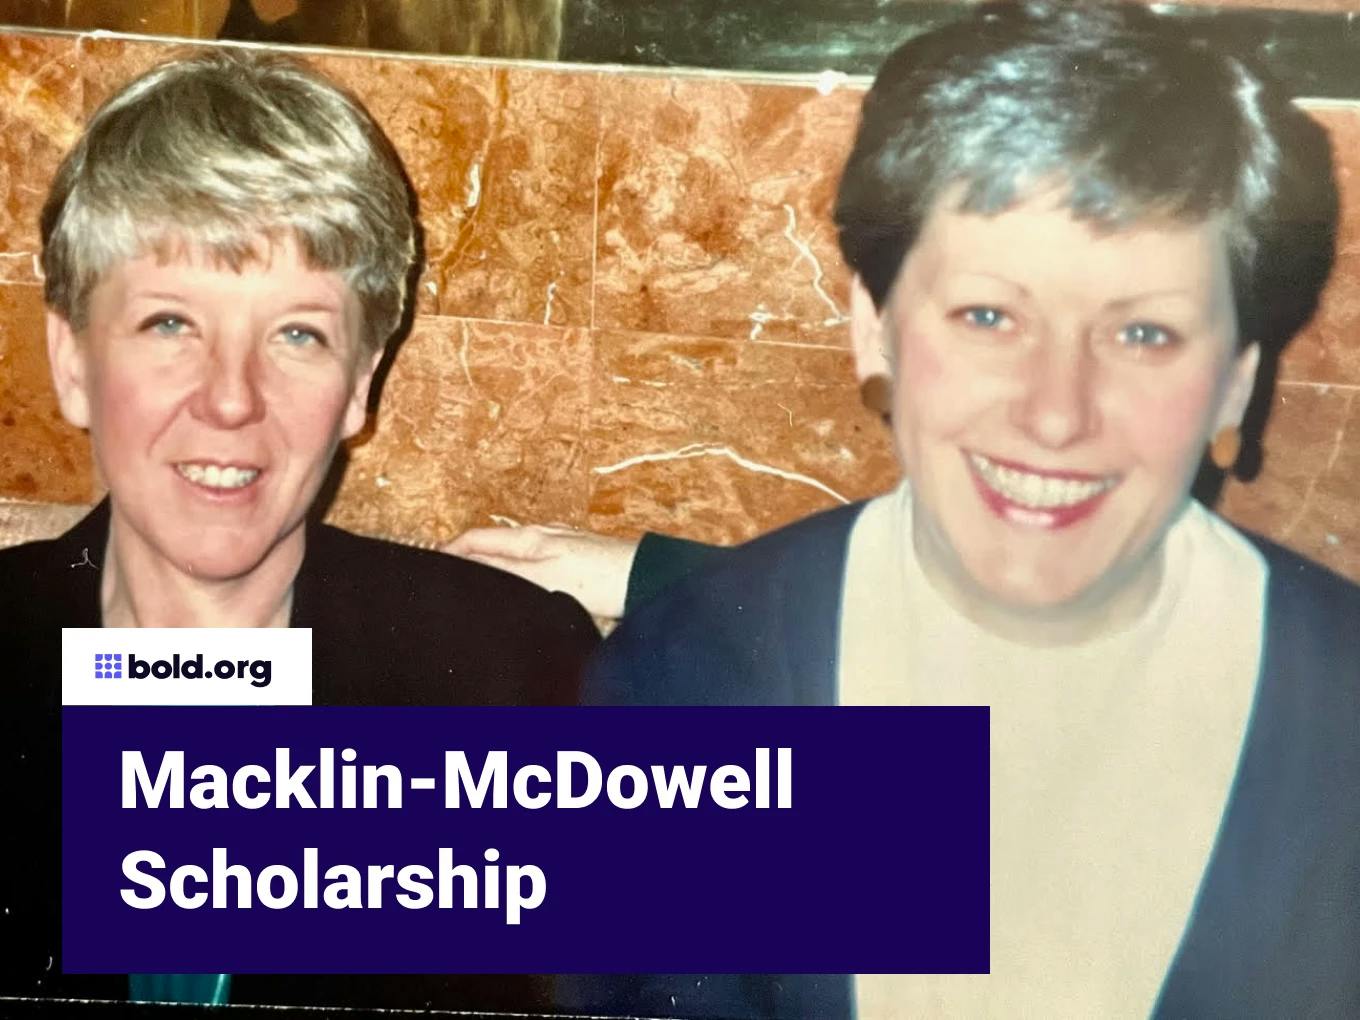 Macklin-McDowell Scholarship